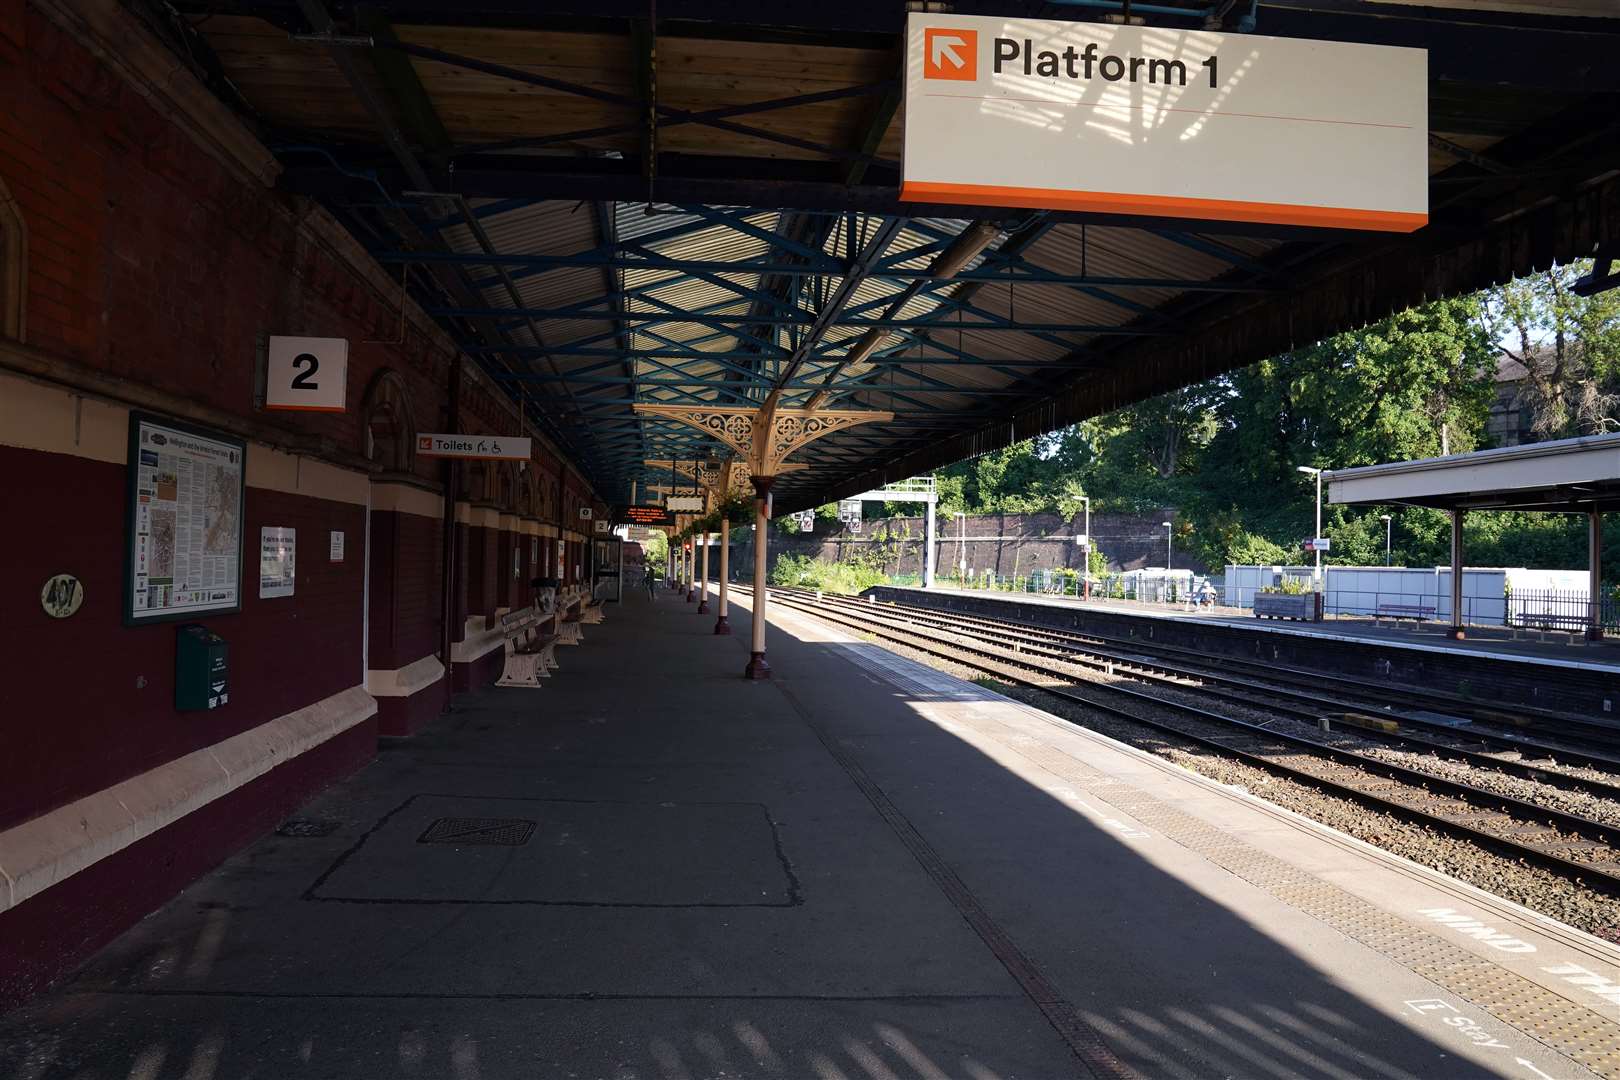 An empty platform at Wellington station in Shropshire (Nick Potts/PA)